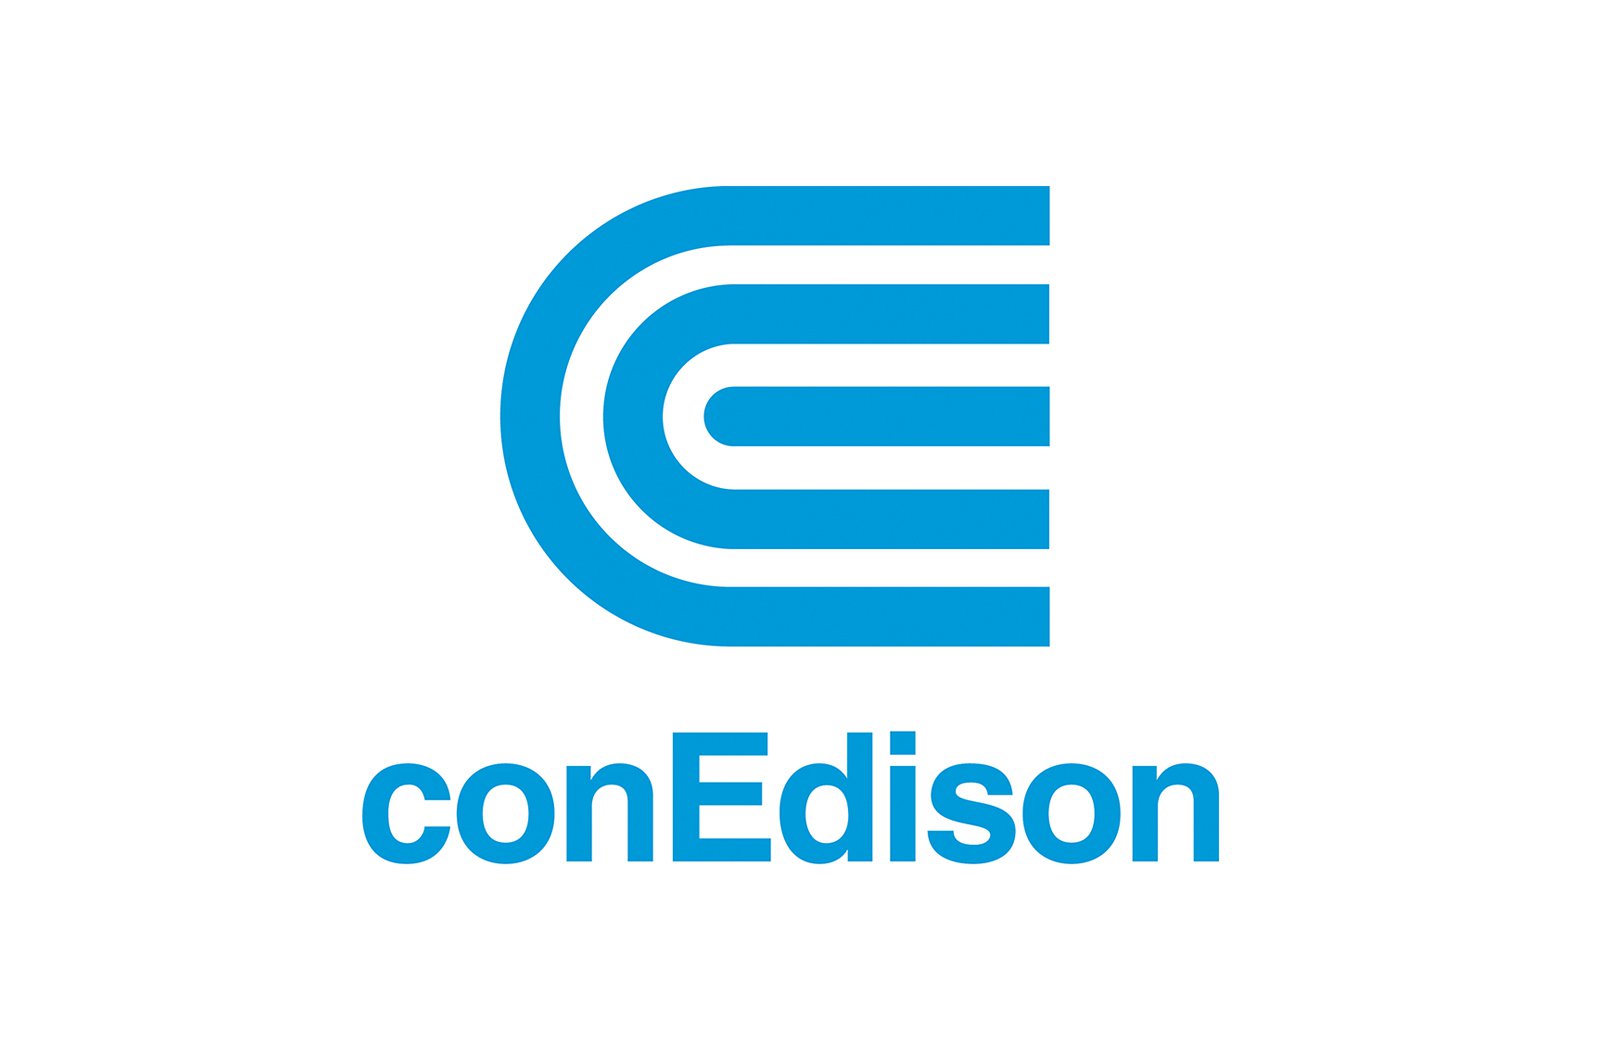 conEdison-logo-designed-by-Arnell-Group.jpg